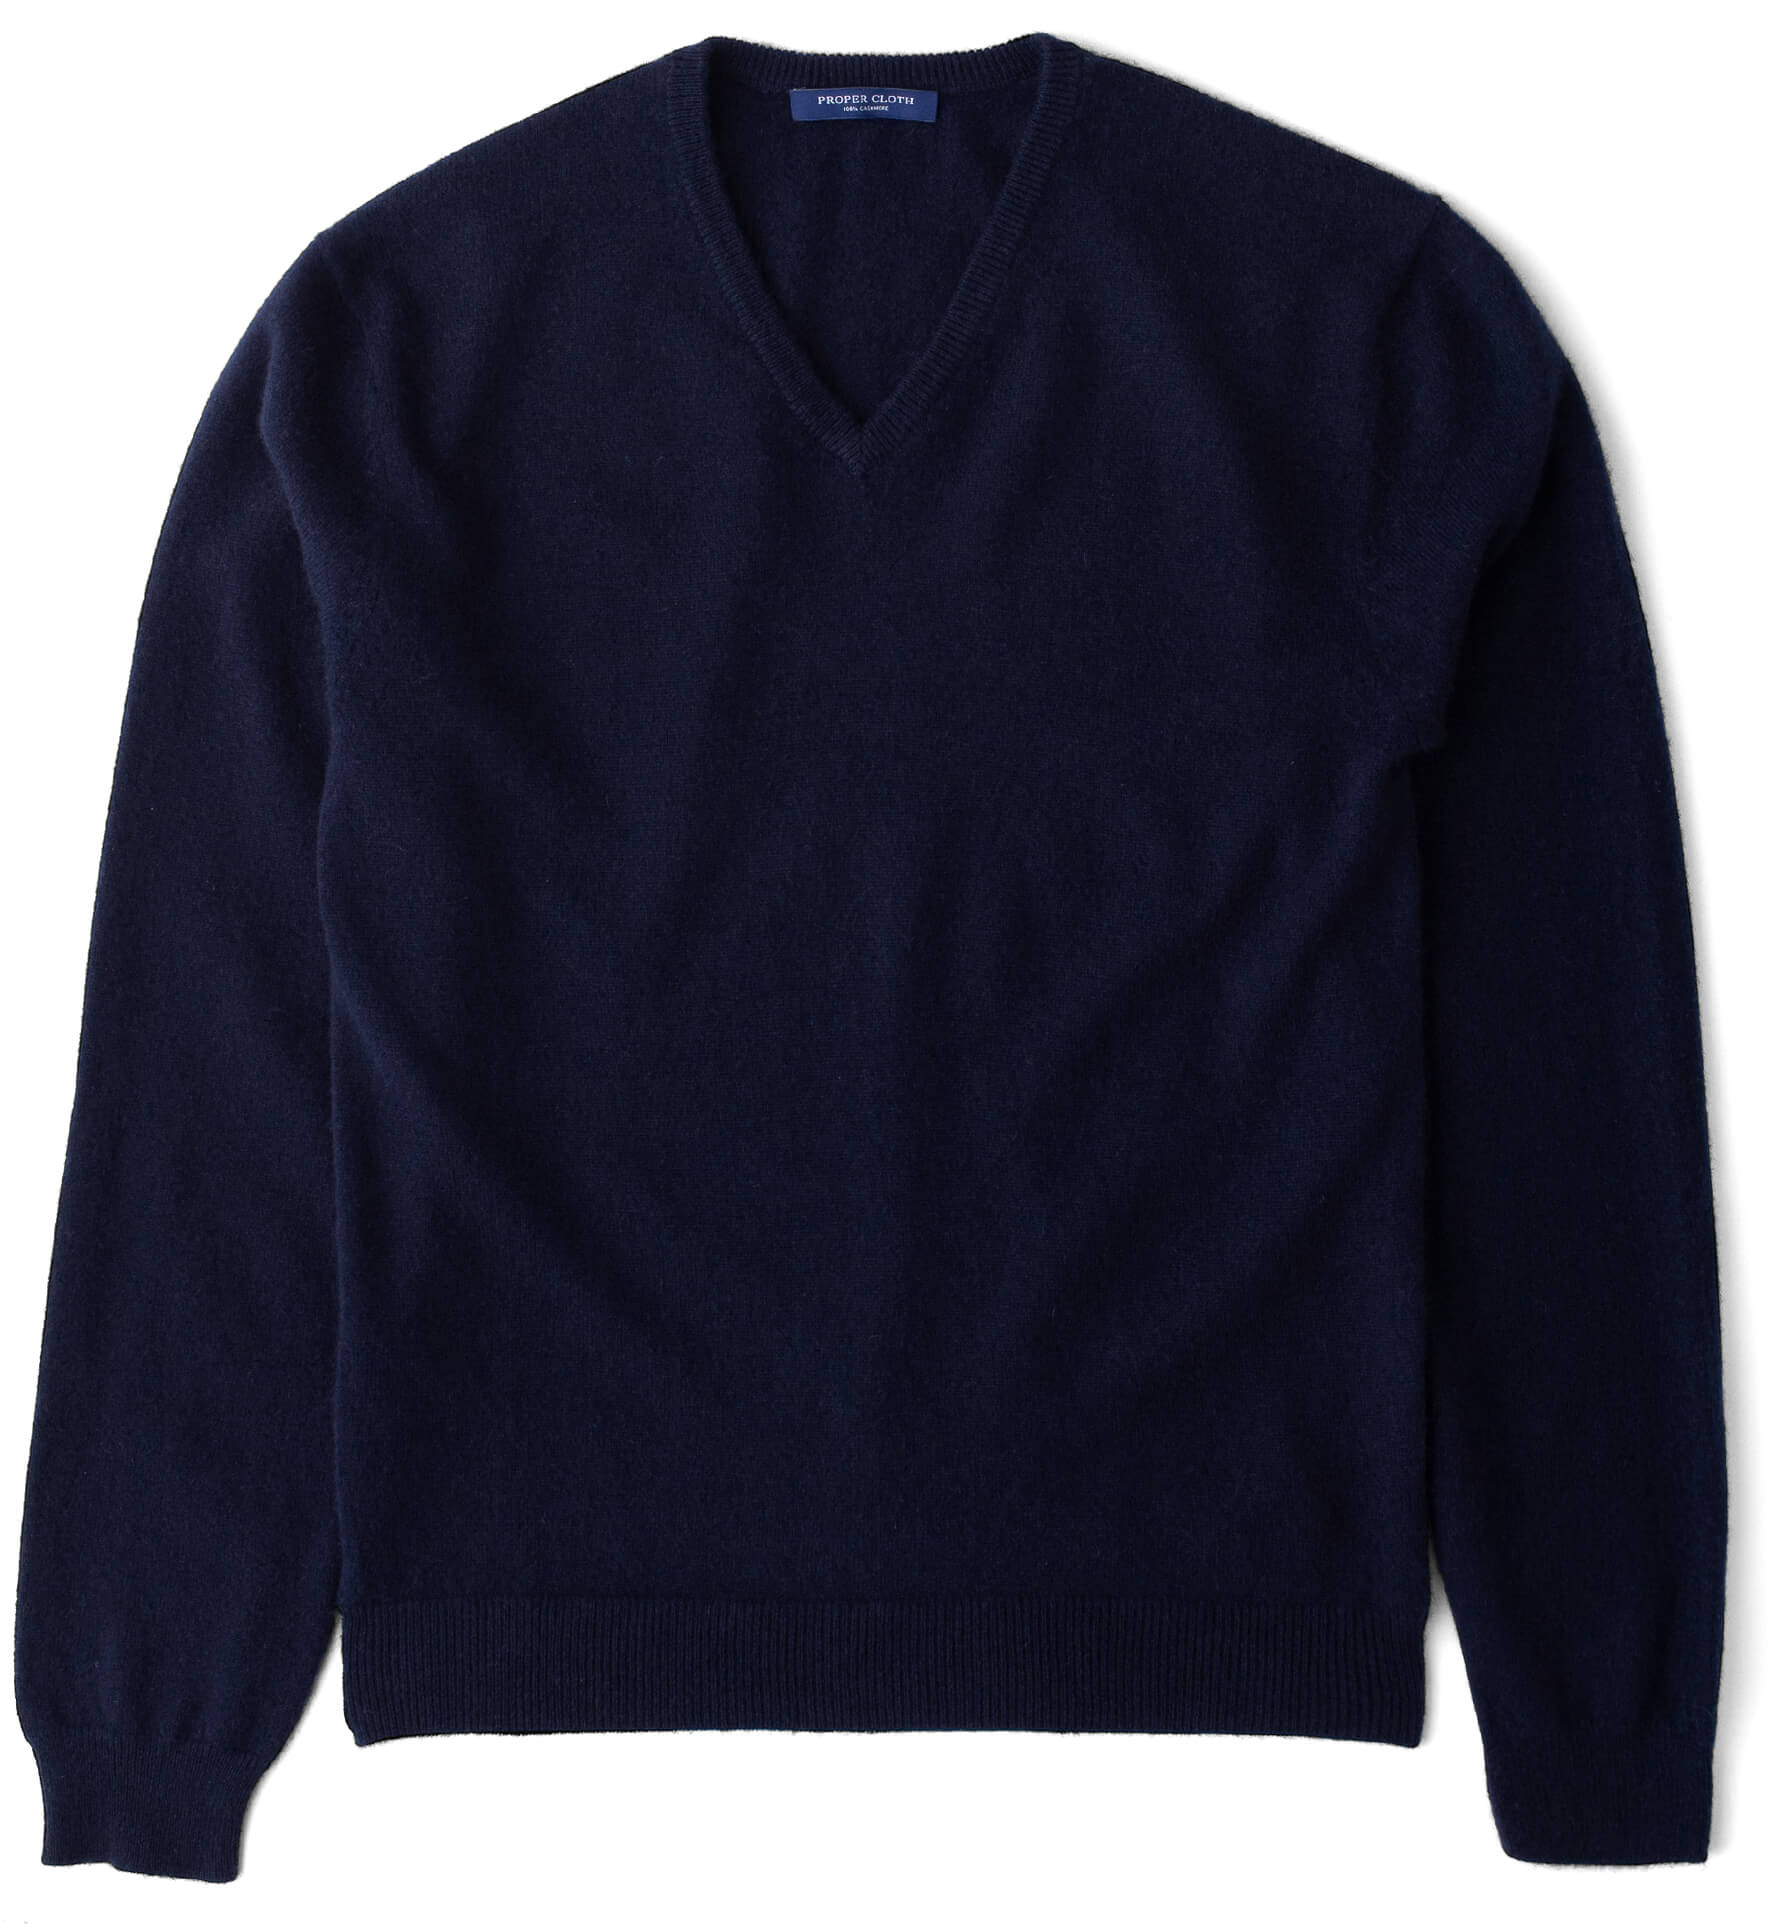 Navy Cashmere V Neck Sweater By Proper Cloth